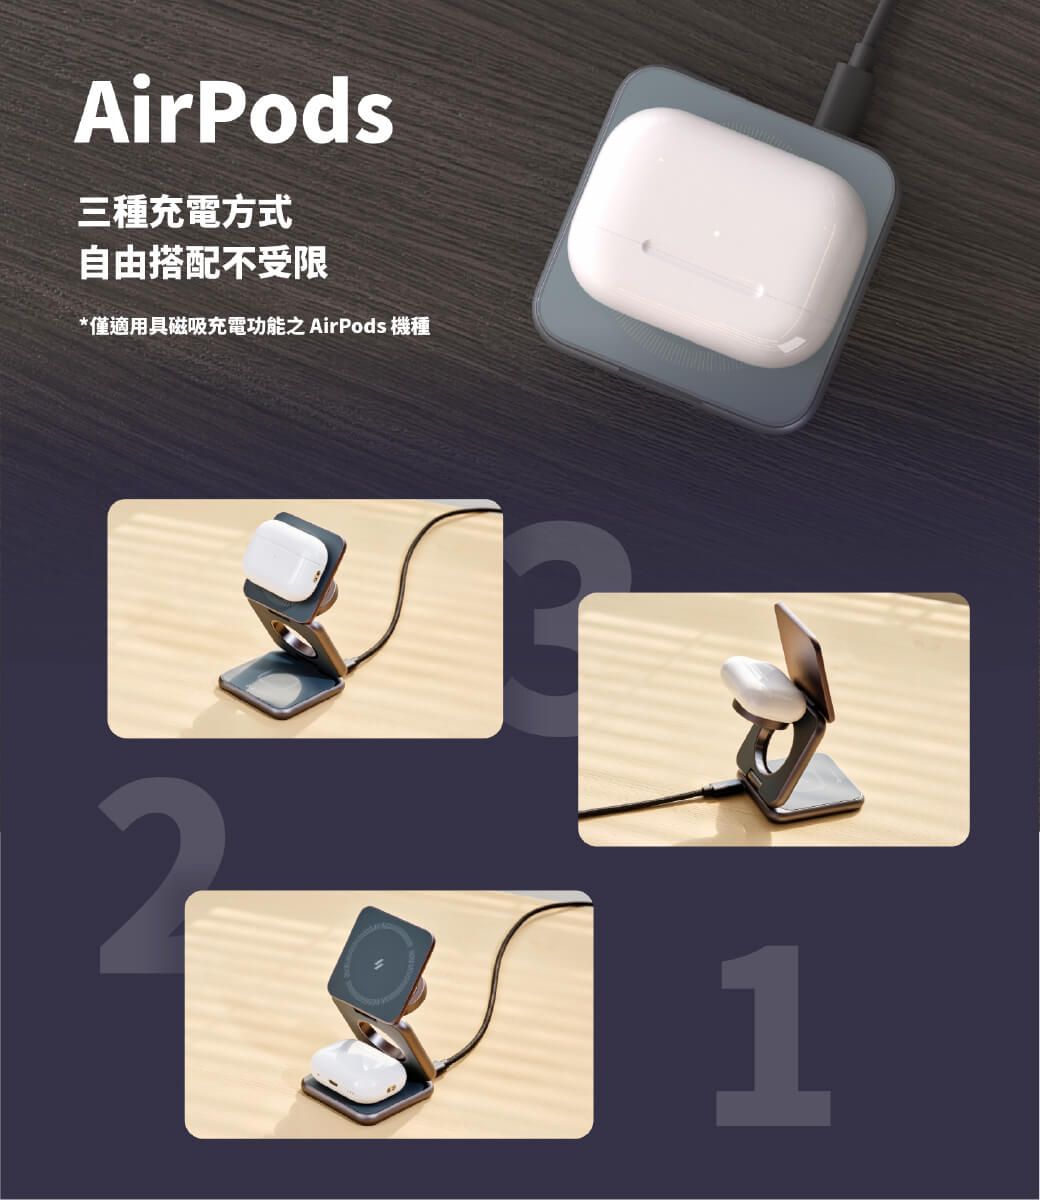 AirPods三種充電方式自由搭配不受限*僅適用具磁吸充電功能之 AirPods 機種1